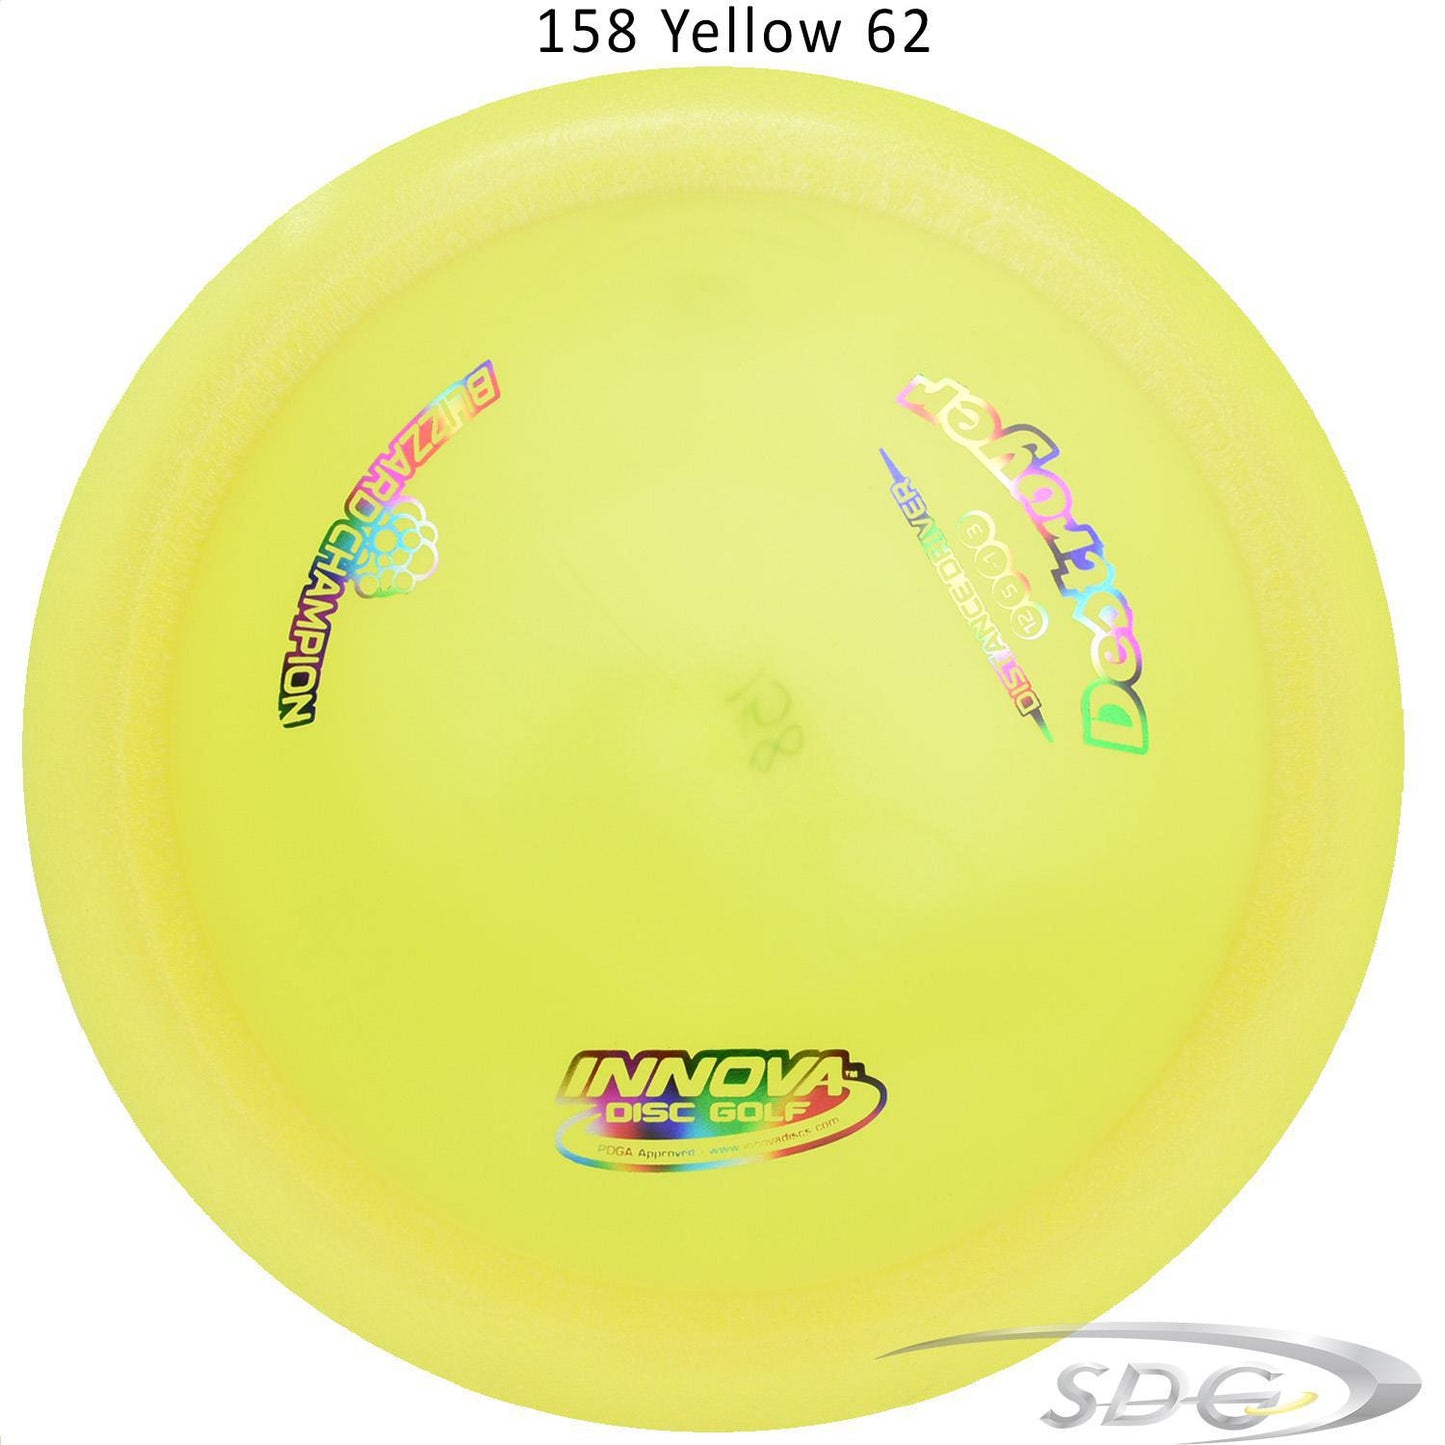 innova-blizzard-champion-destroyer-disc-golf-distance-driver 158 Yellow 62 